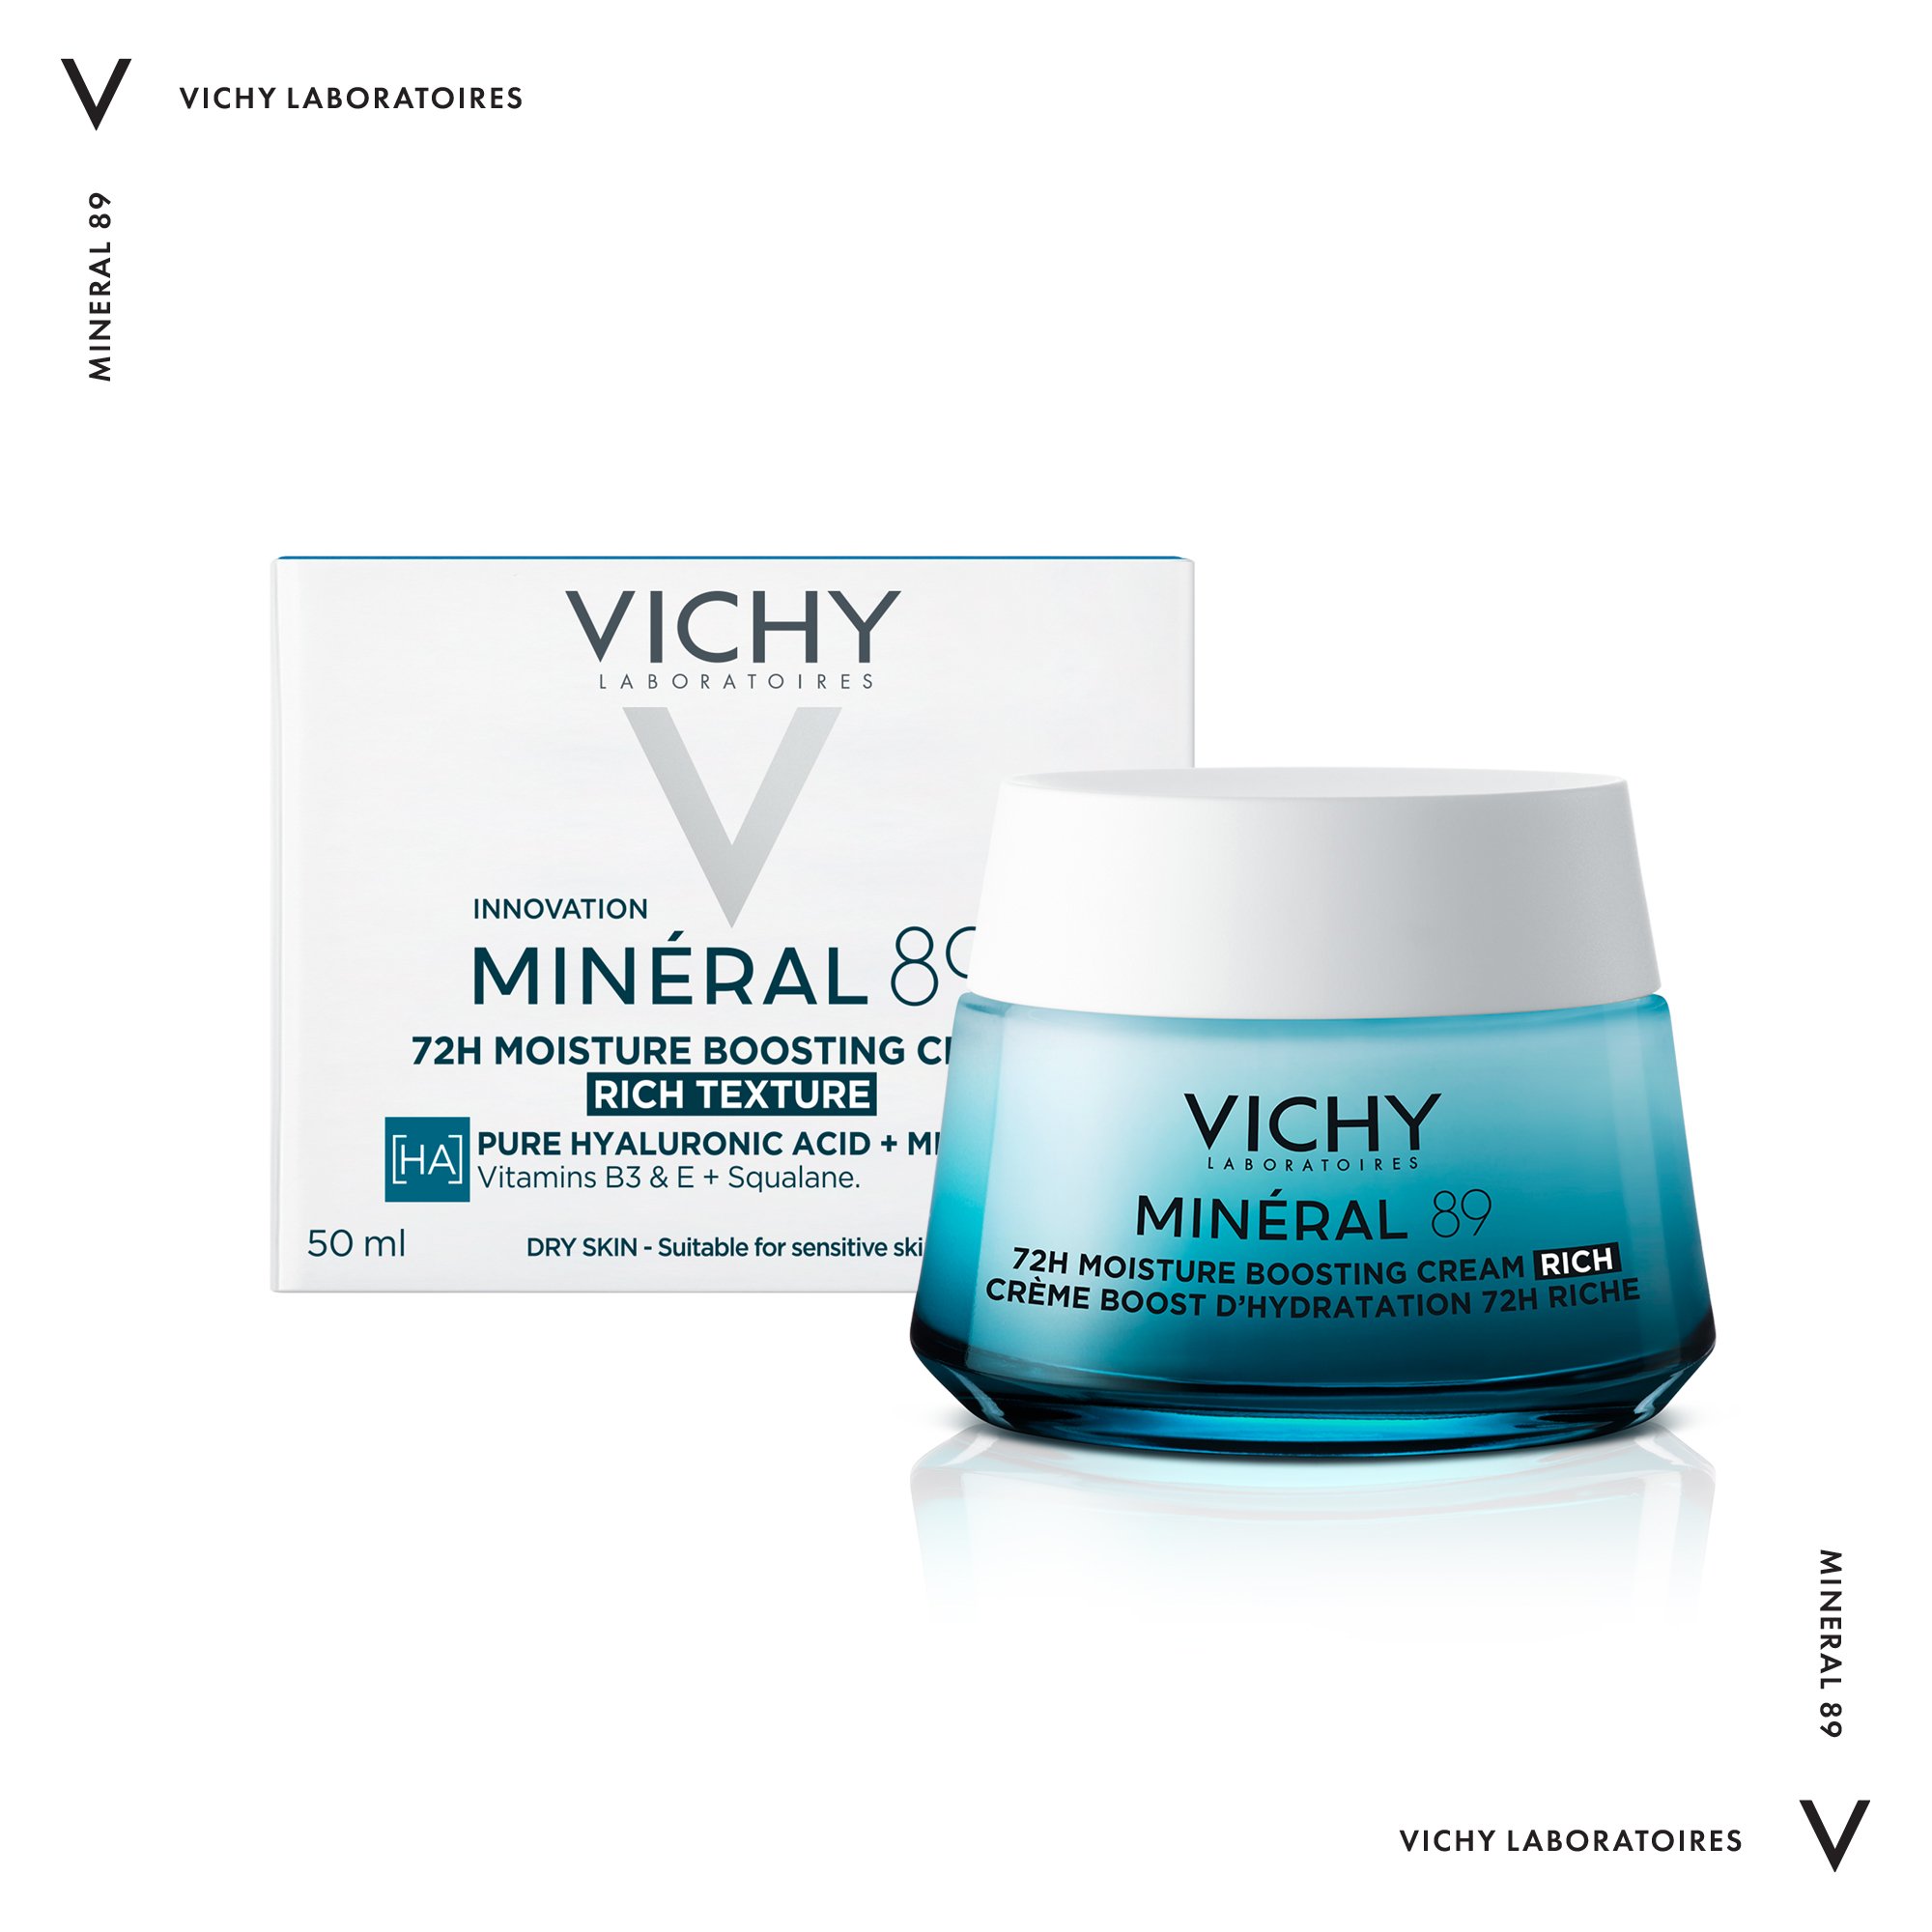 Насыщенный крем для сухой кожи Vichy Mineral 89 Rich 72H Moisture Boosting Cream, 50 мл - фото 2